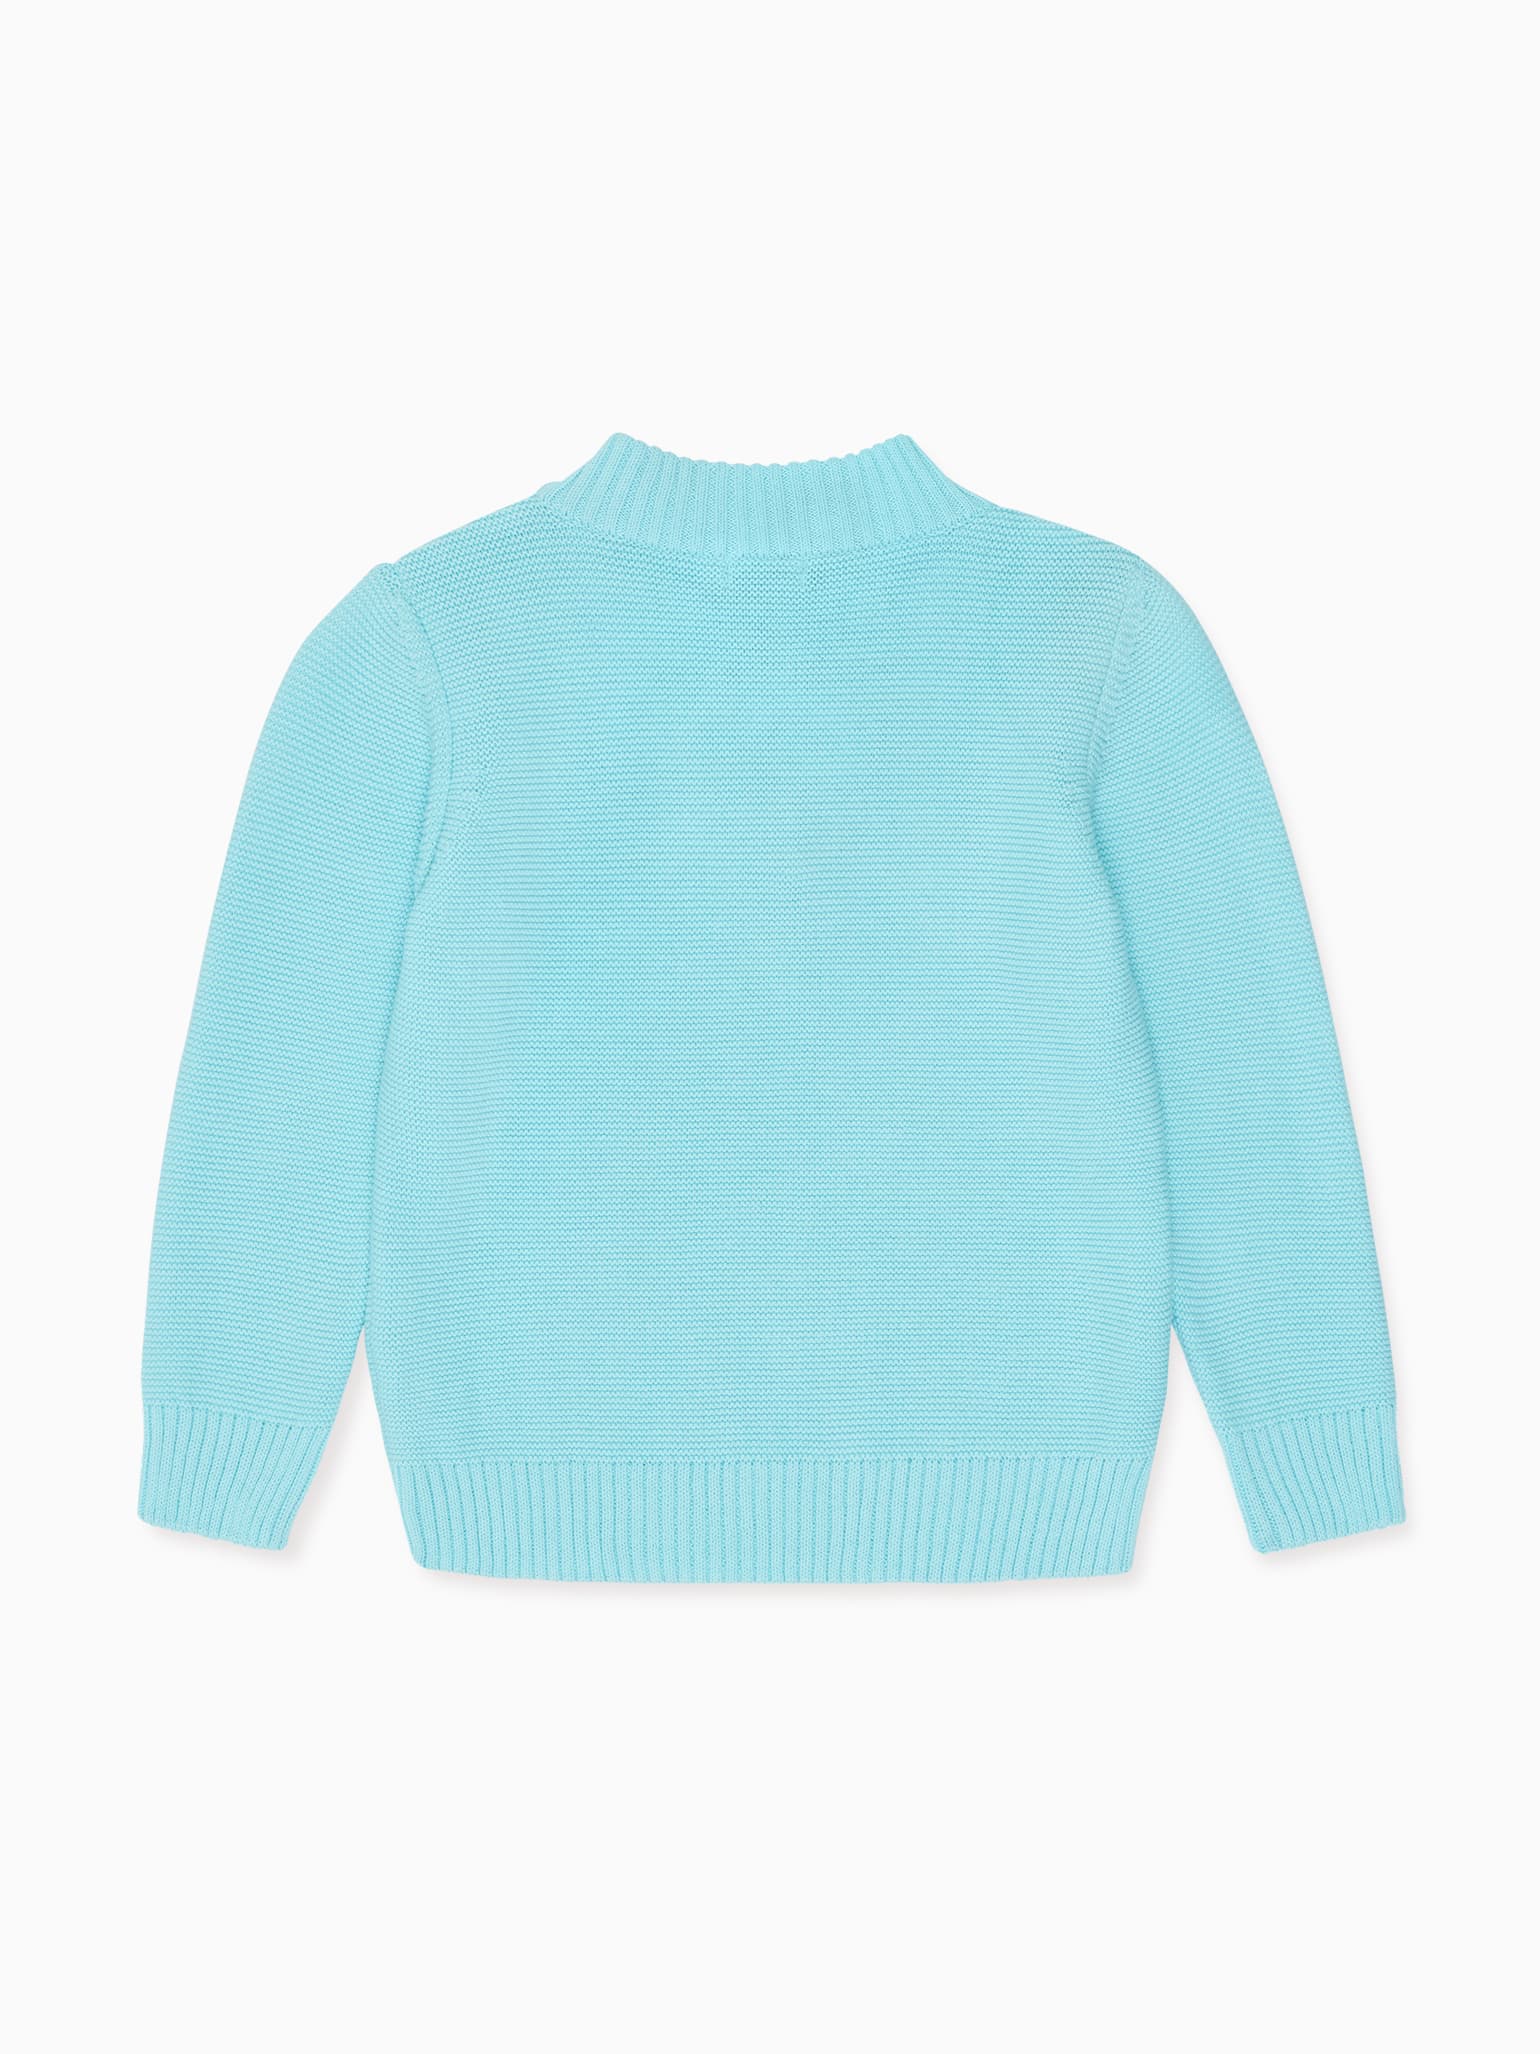 Aqua Sonny Boy Cotton Sweater